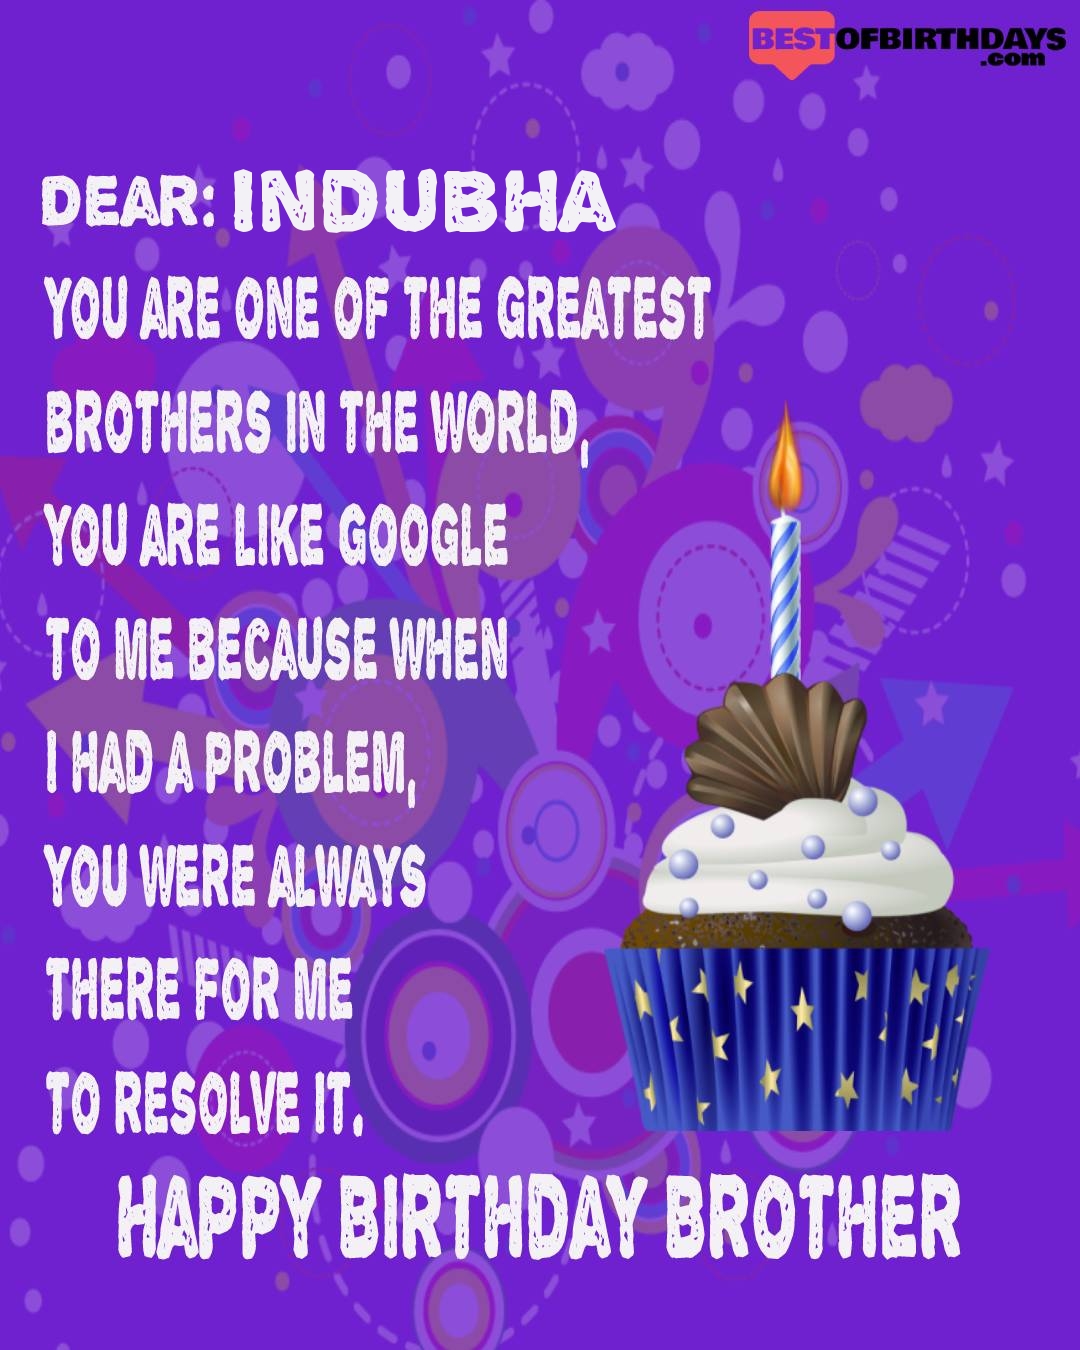 Happy birthday indubha bhai brother bro